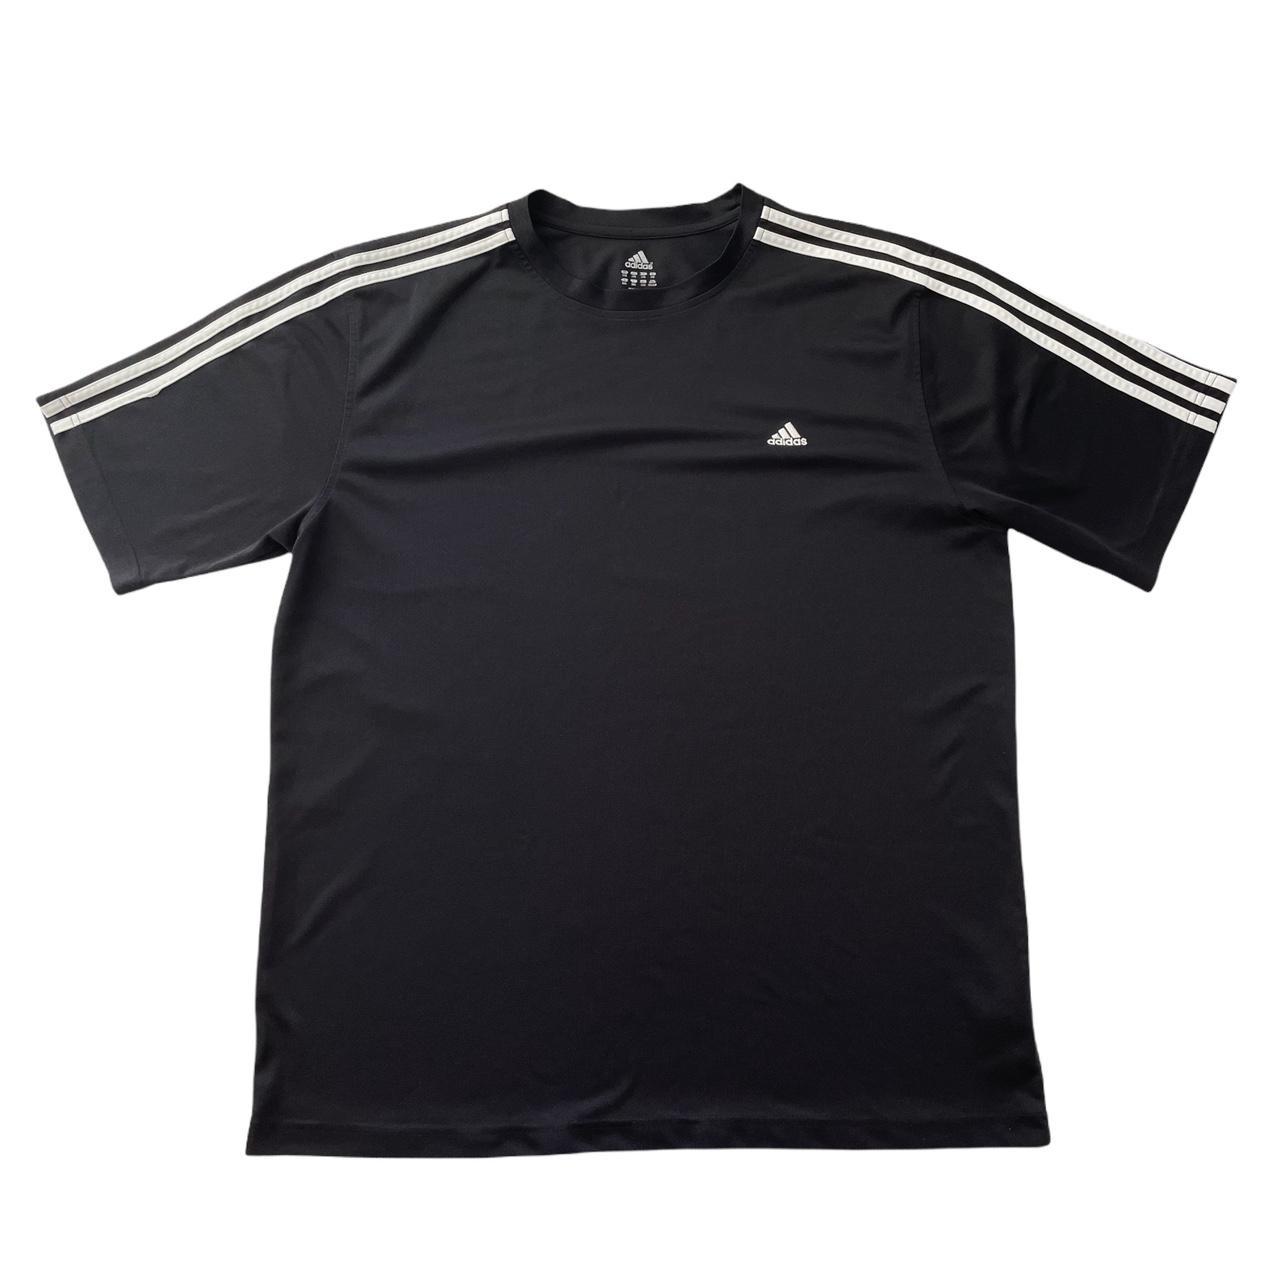 Adidas Men's Black and White T-shirt | Depop